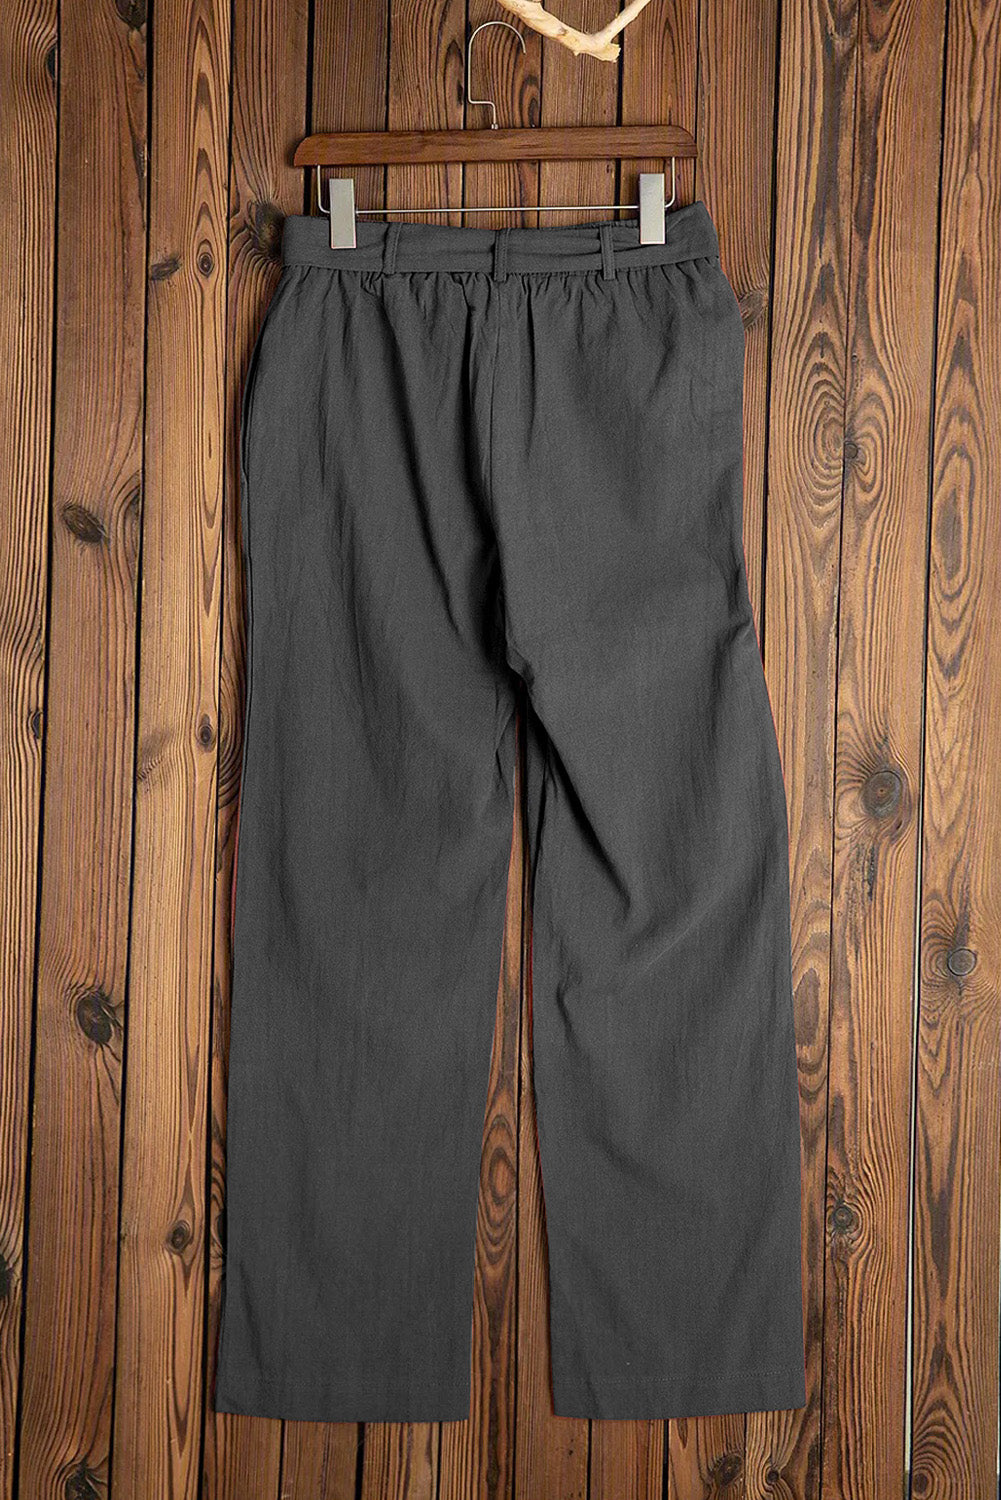 Pantaloni larghi neri con coulisse in vita elastica